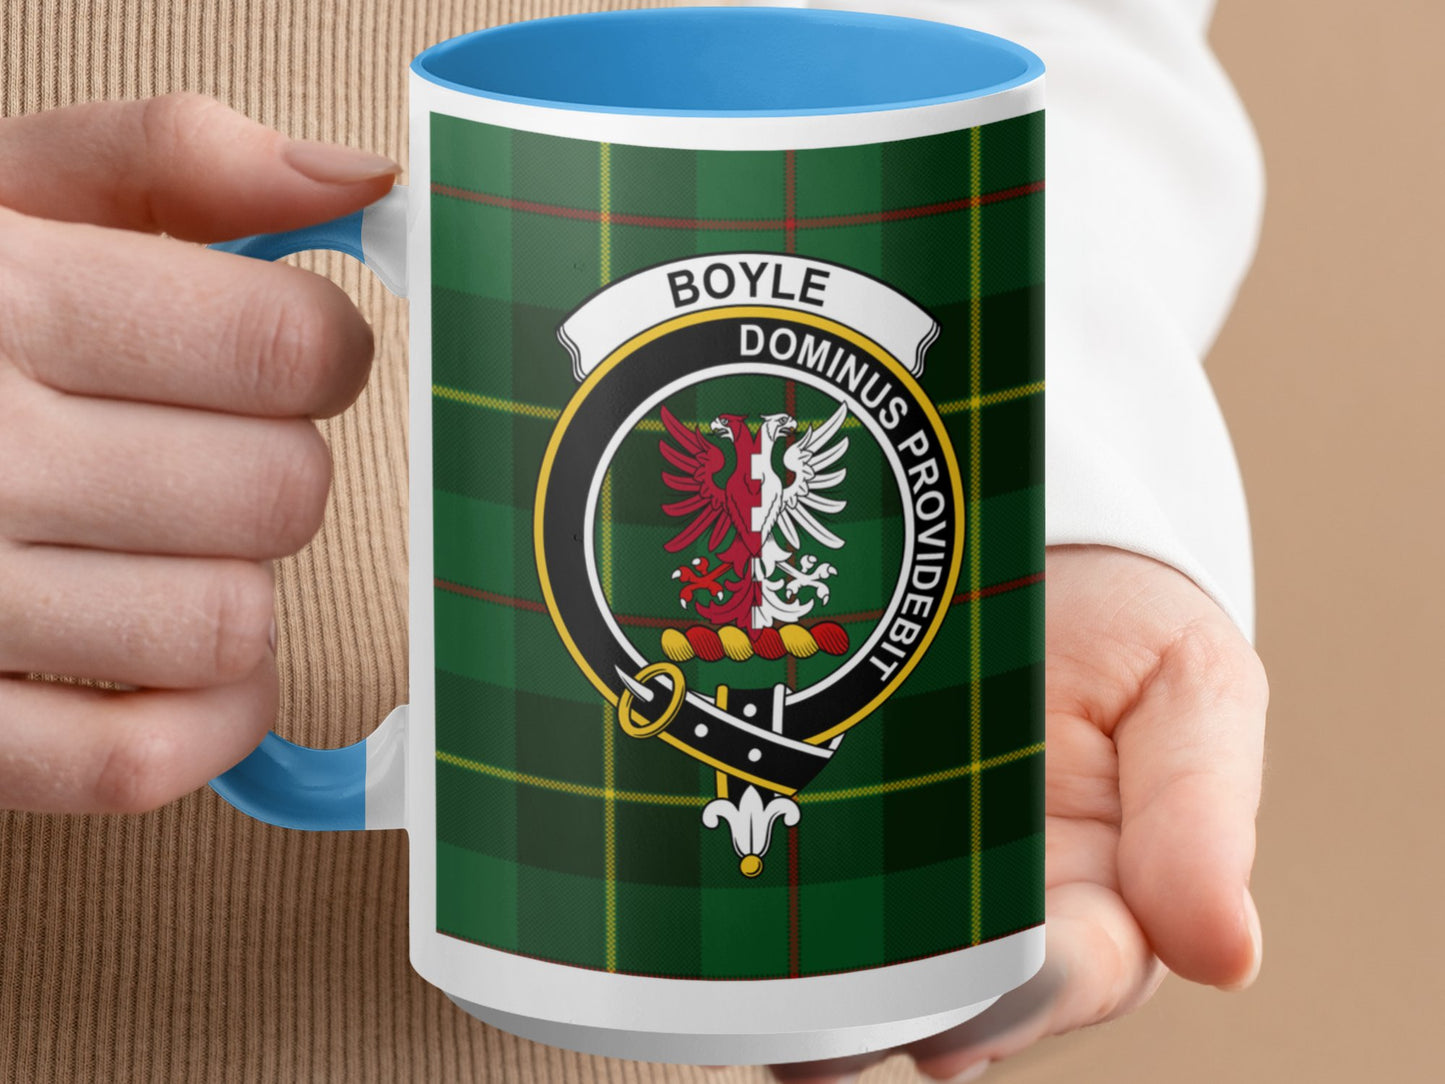 Boyle Dominus Providebit Crest Emblem Green Plaid Mug - Living Stone Gifts